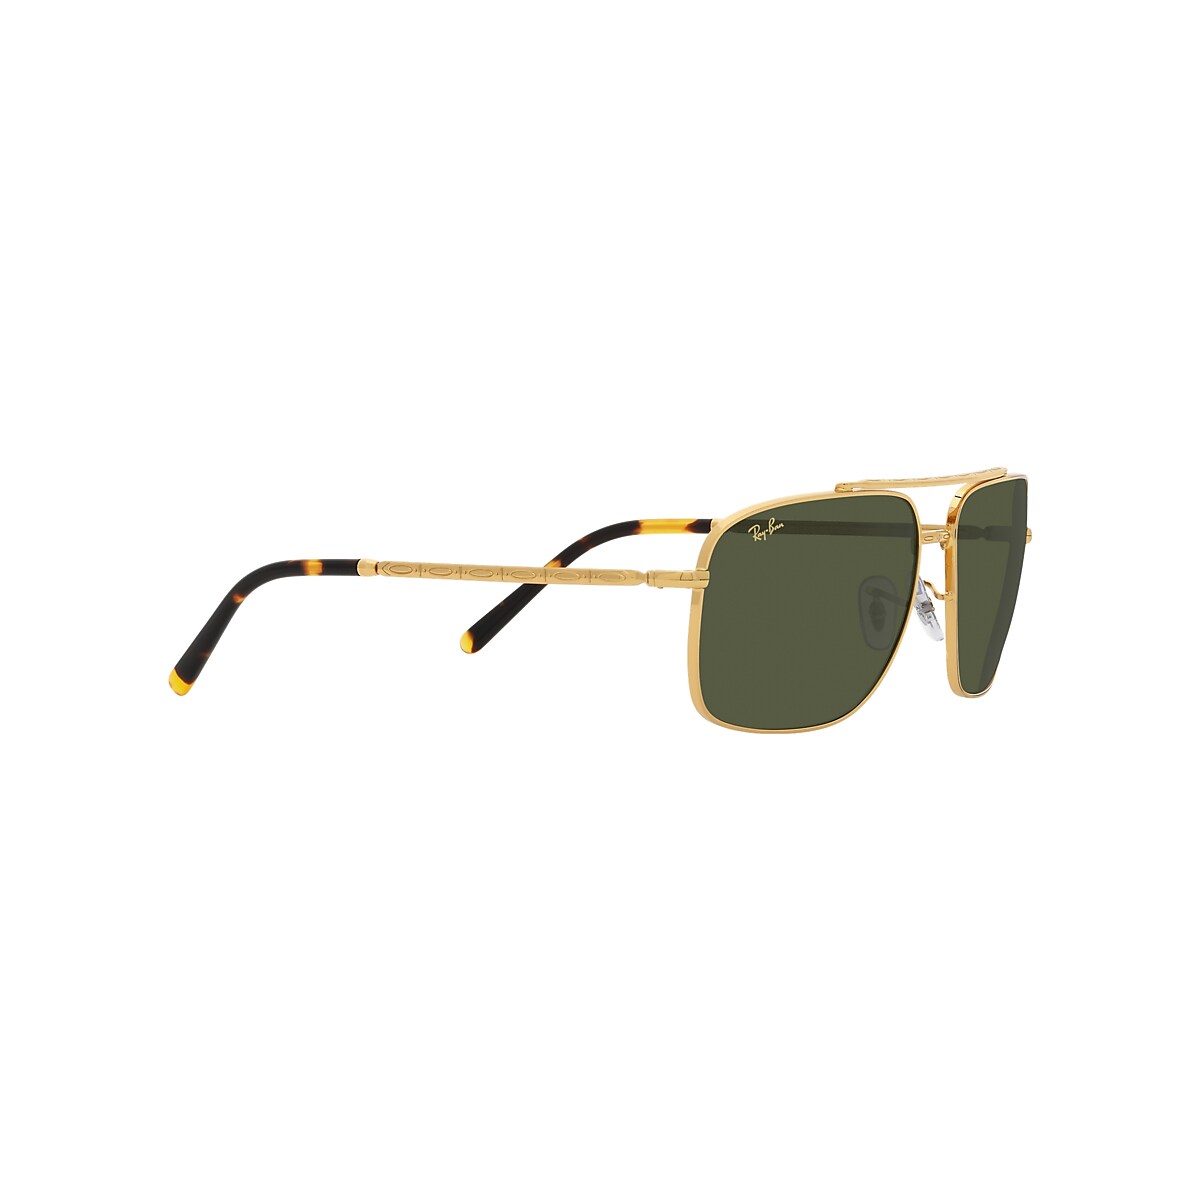 Ray-Ban RB3796 59 Dark Green & Gold Polarized Sunglasses